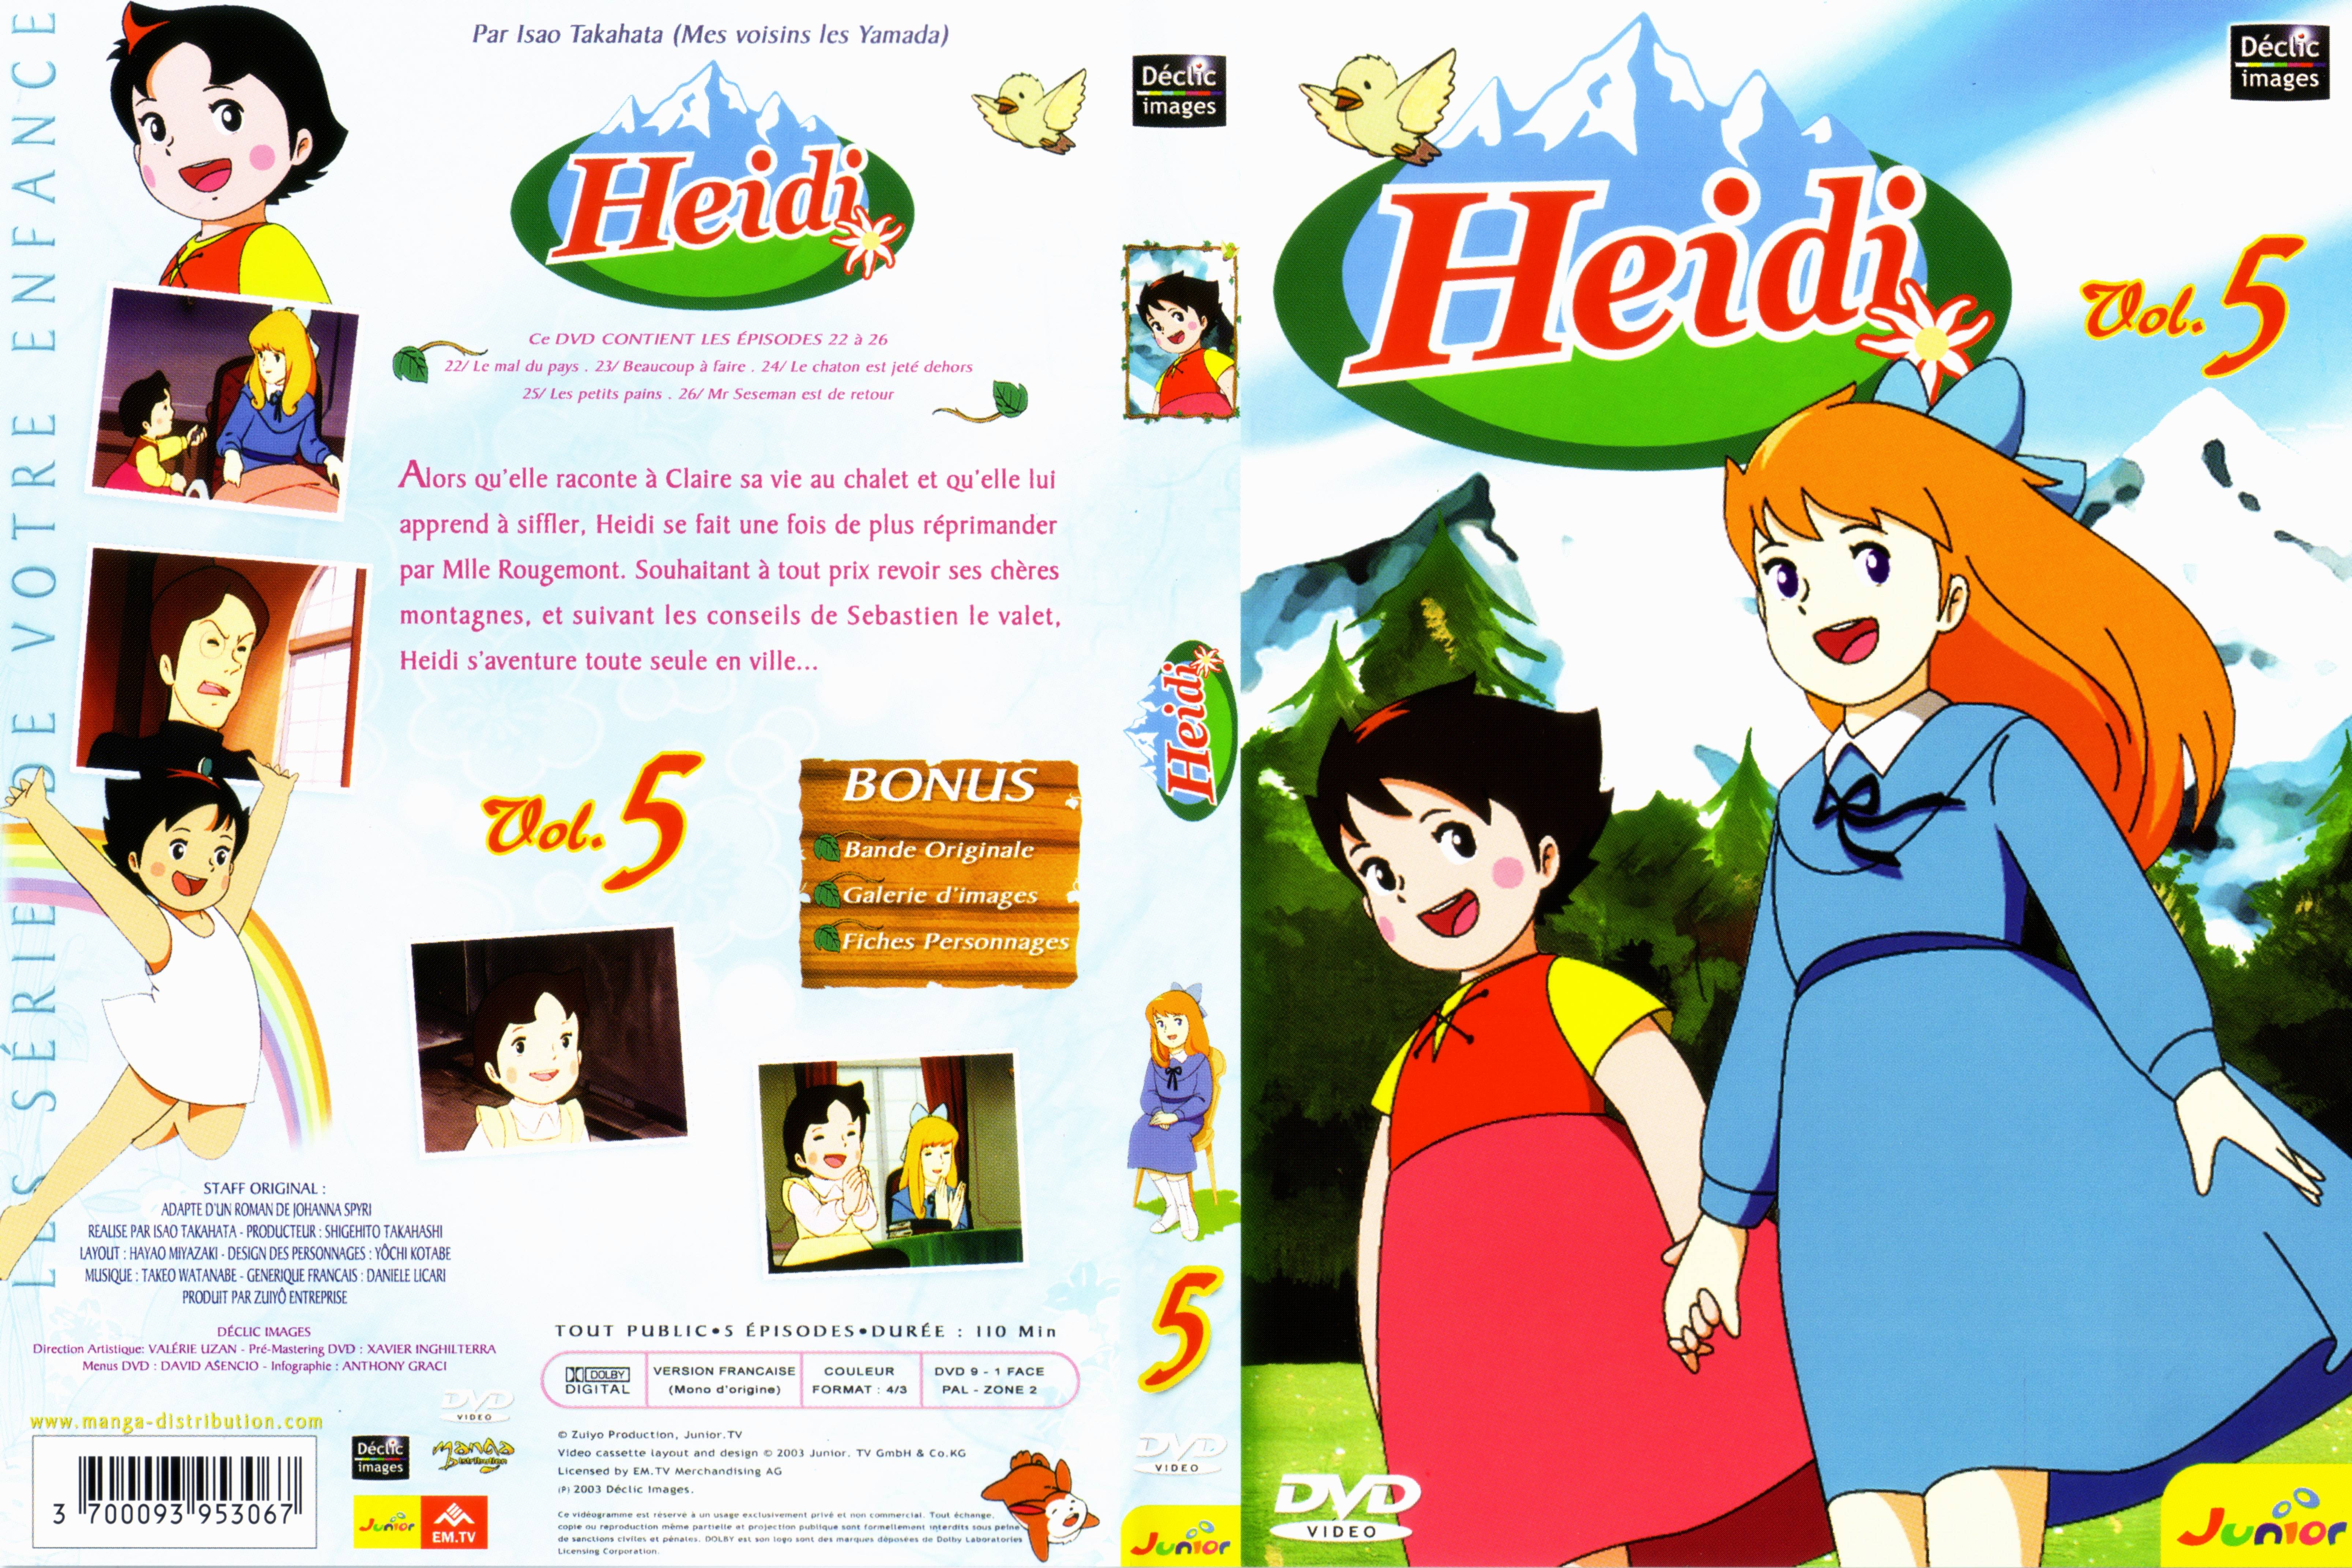 Jaquette DVD Heidi DVD 05